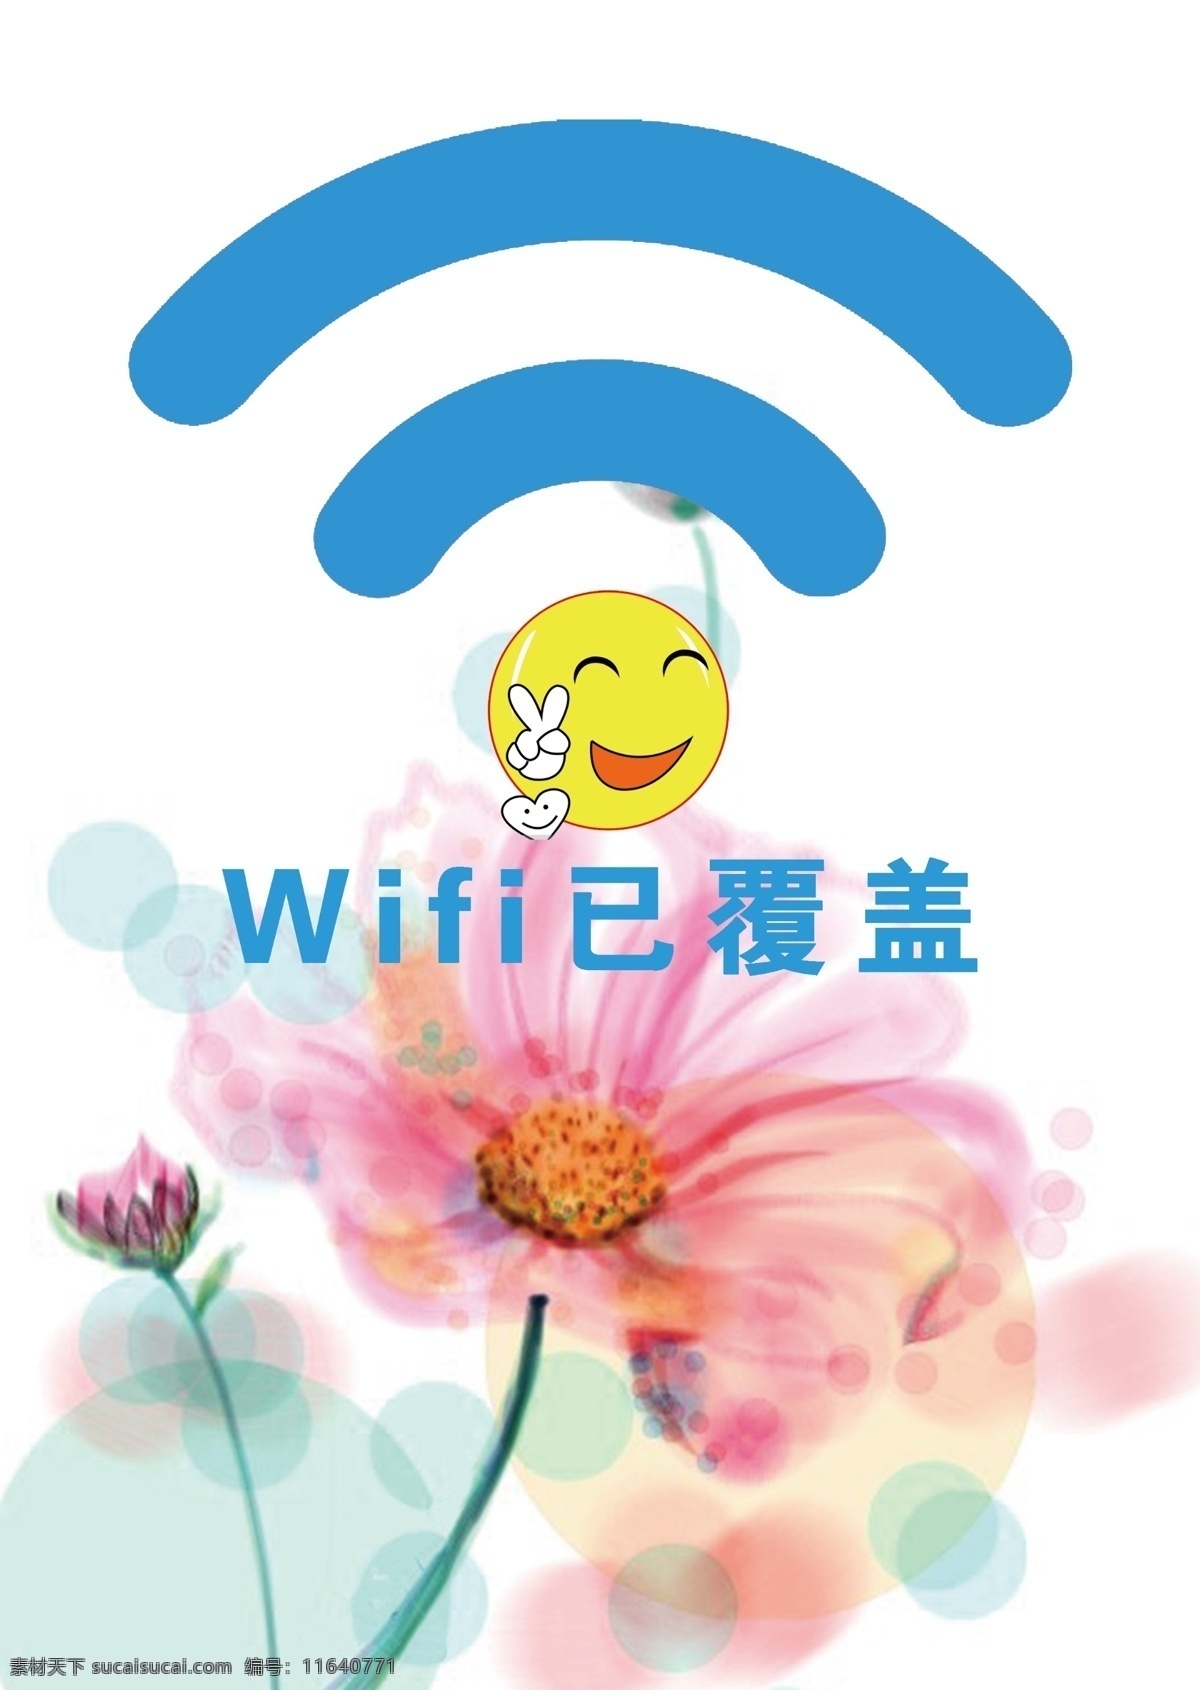 wifi海报 wifi覆盖 海报 格桑花 西藏 笑脸 白色